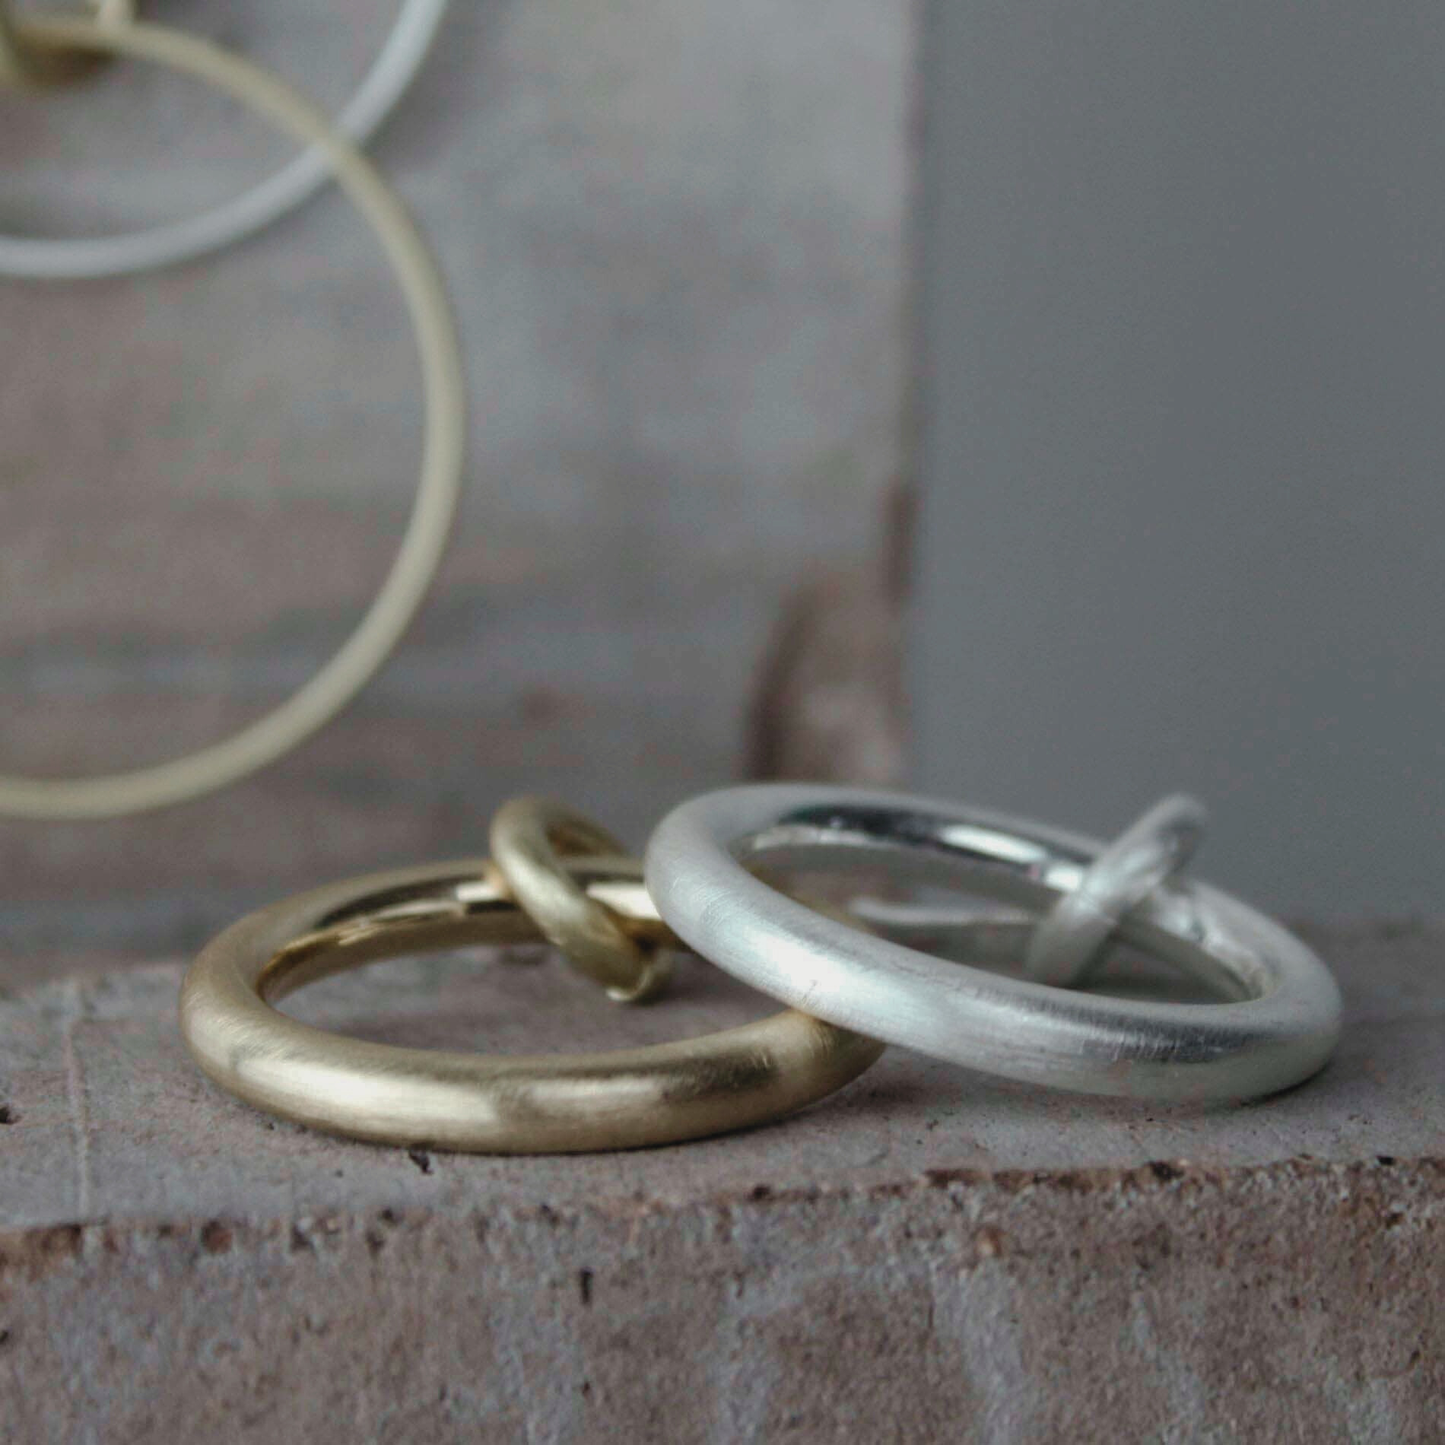 Tula Adjustable Chunky Ring Necklace Silver Plating I Dansk Copenhagen